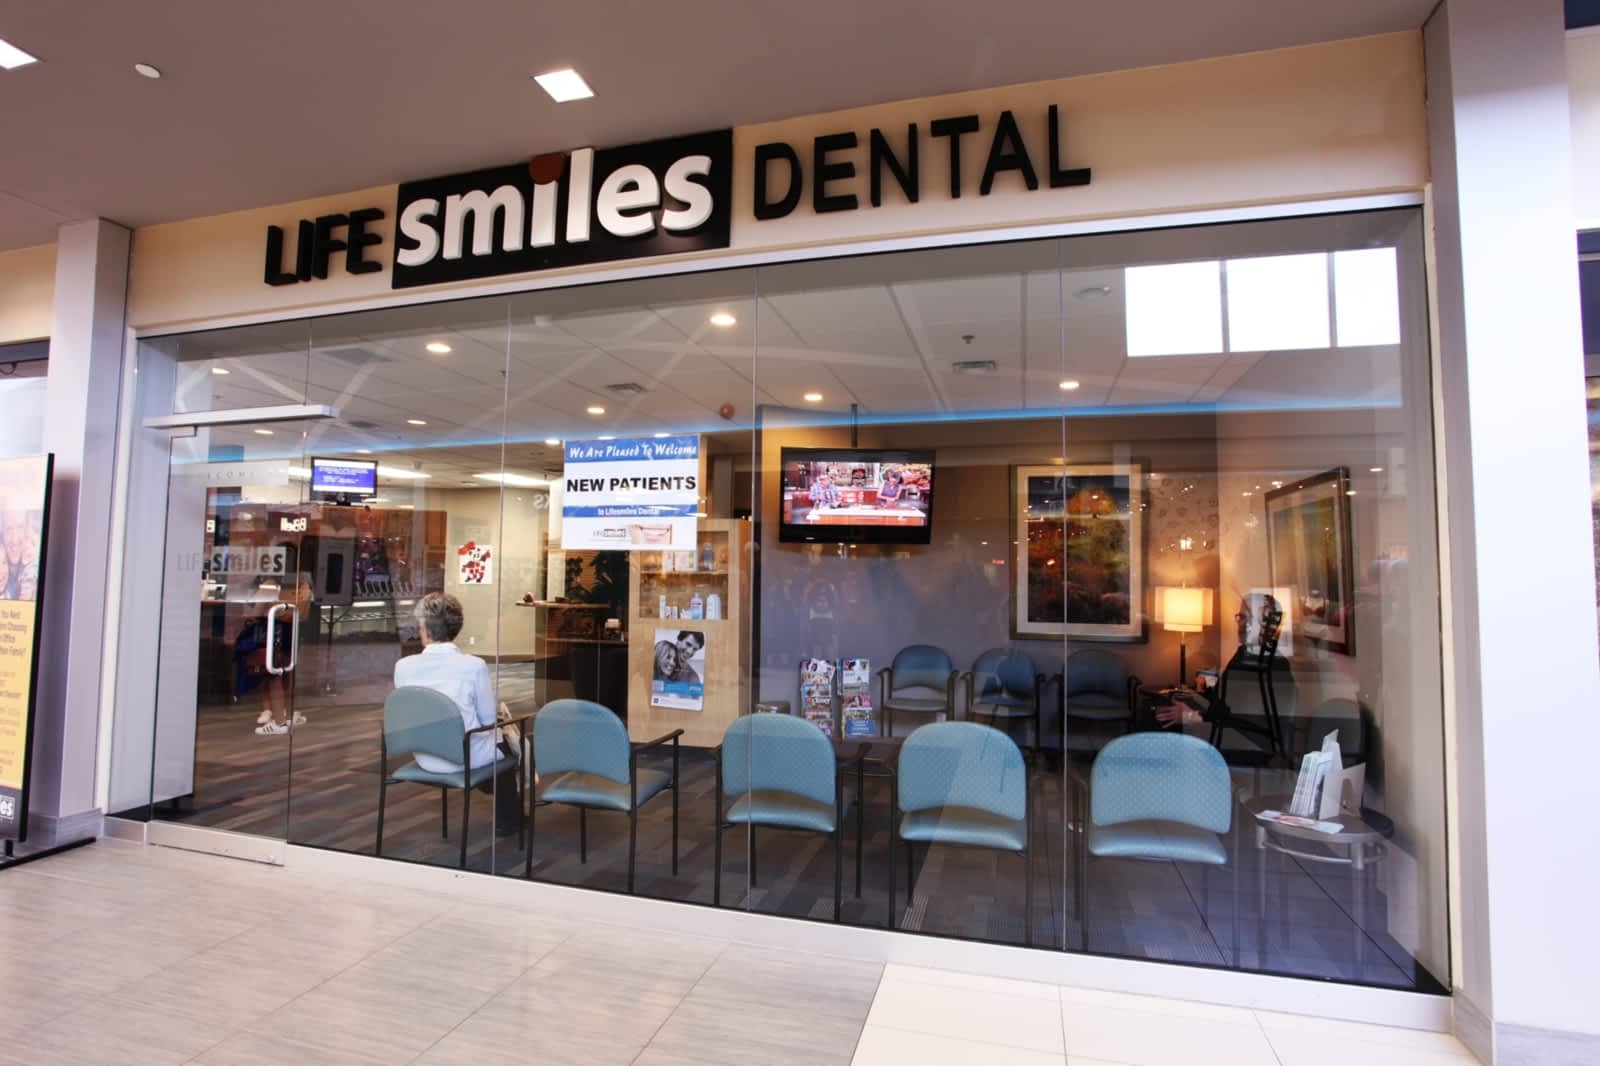 life smiles dental care reviews - Good Sort Diary Photo Galleries